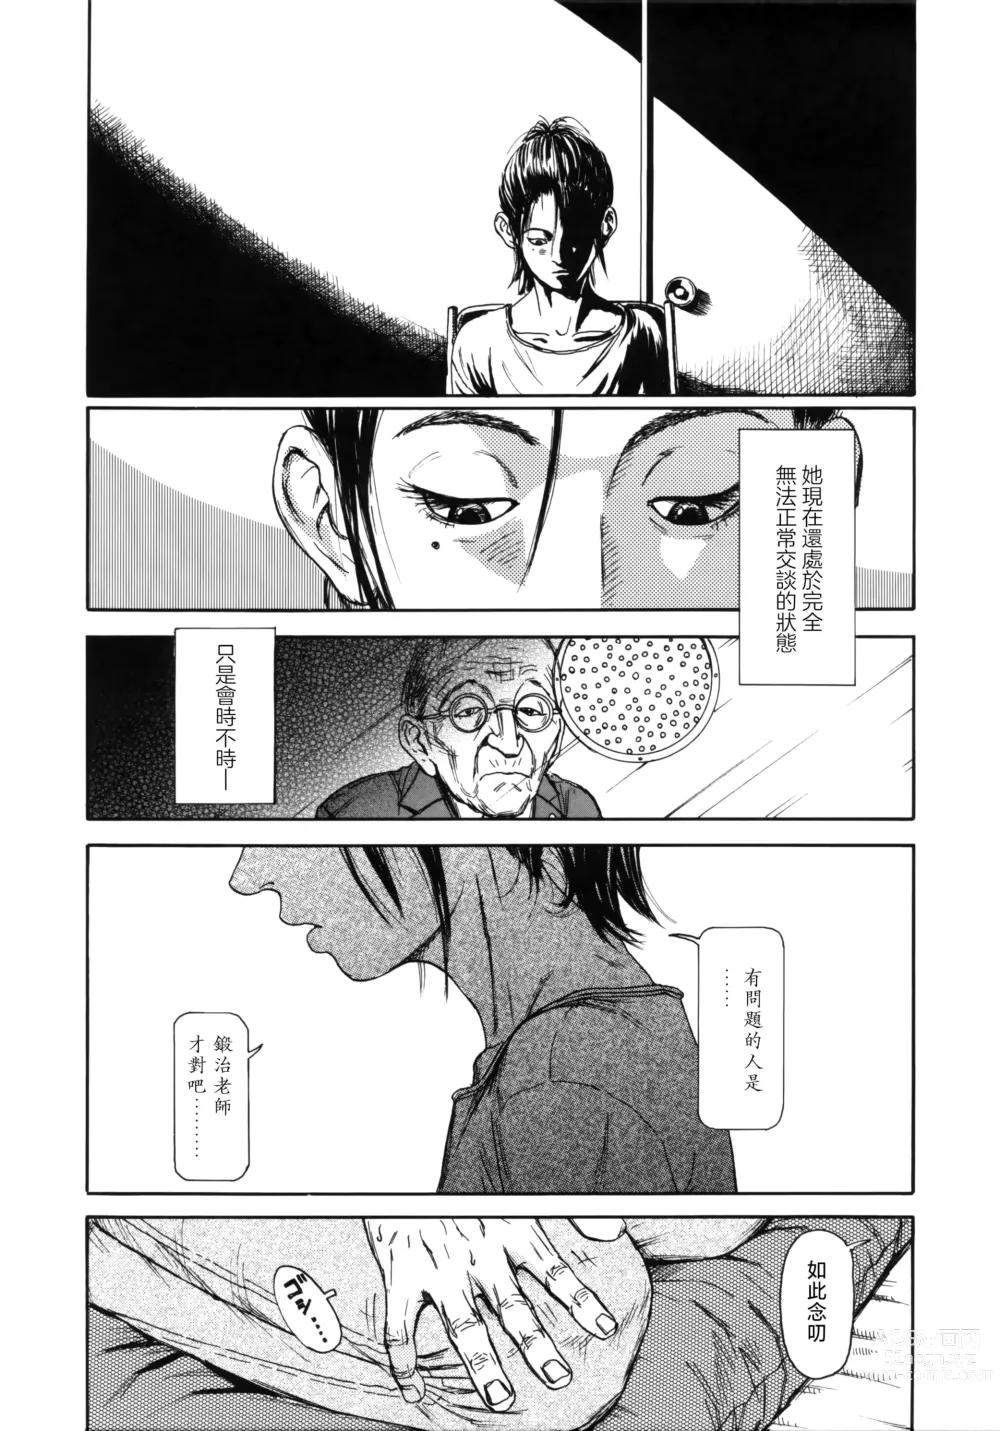 Page 14 of manga Mezame